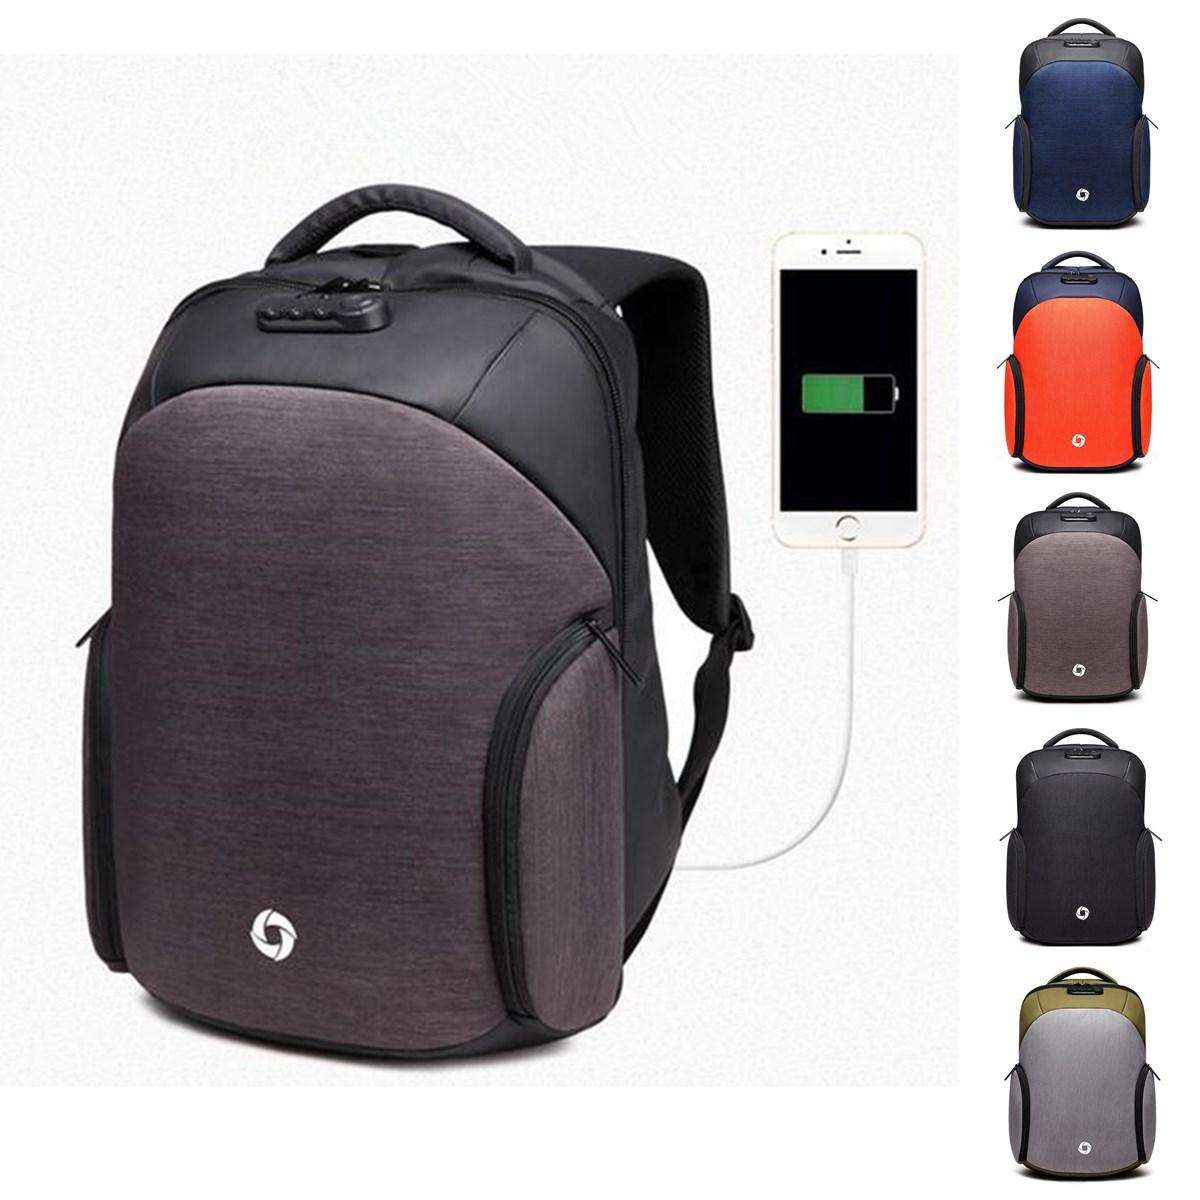  USB-зарядка Anti-theft Backpack Laptop Mens Рюкзаки На открытом воздухе Travel Business Сумка Школа Сумки